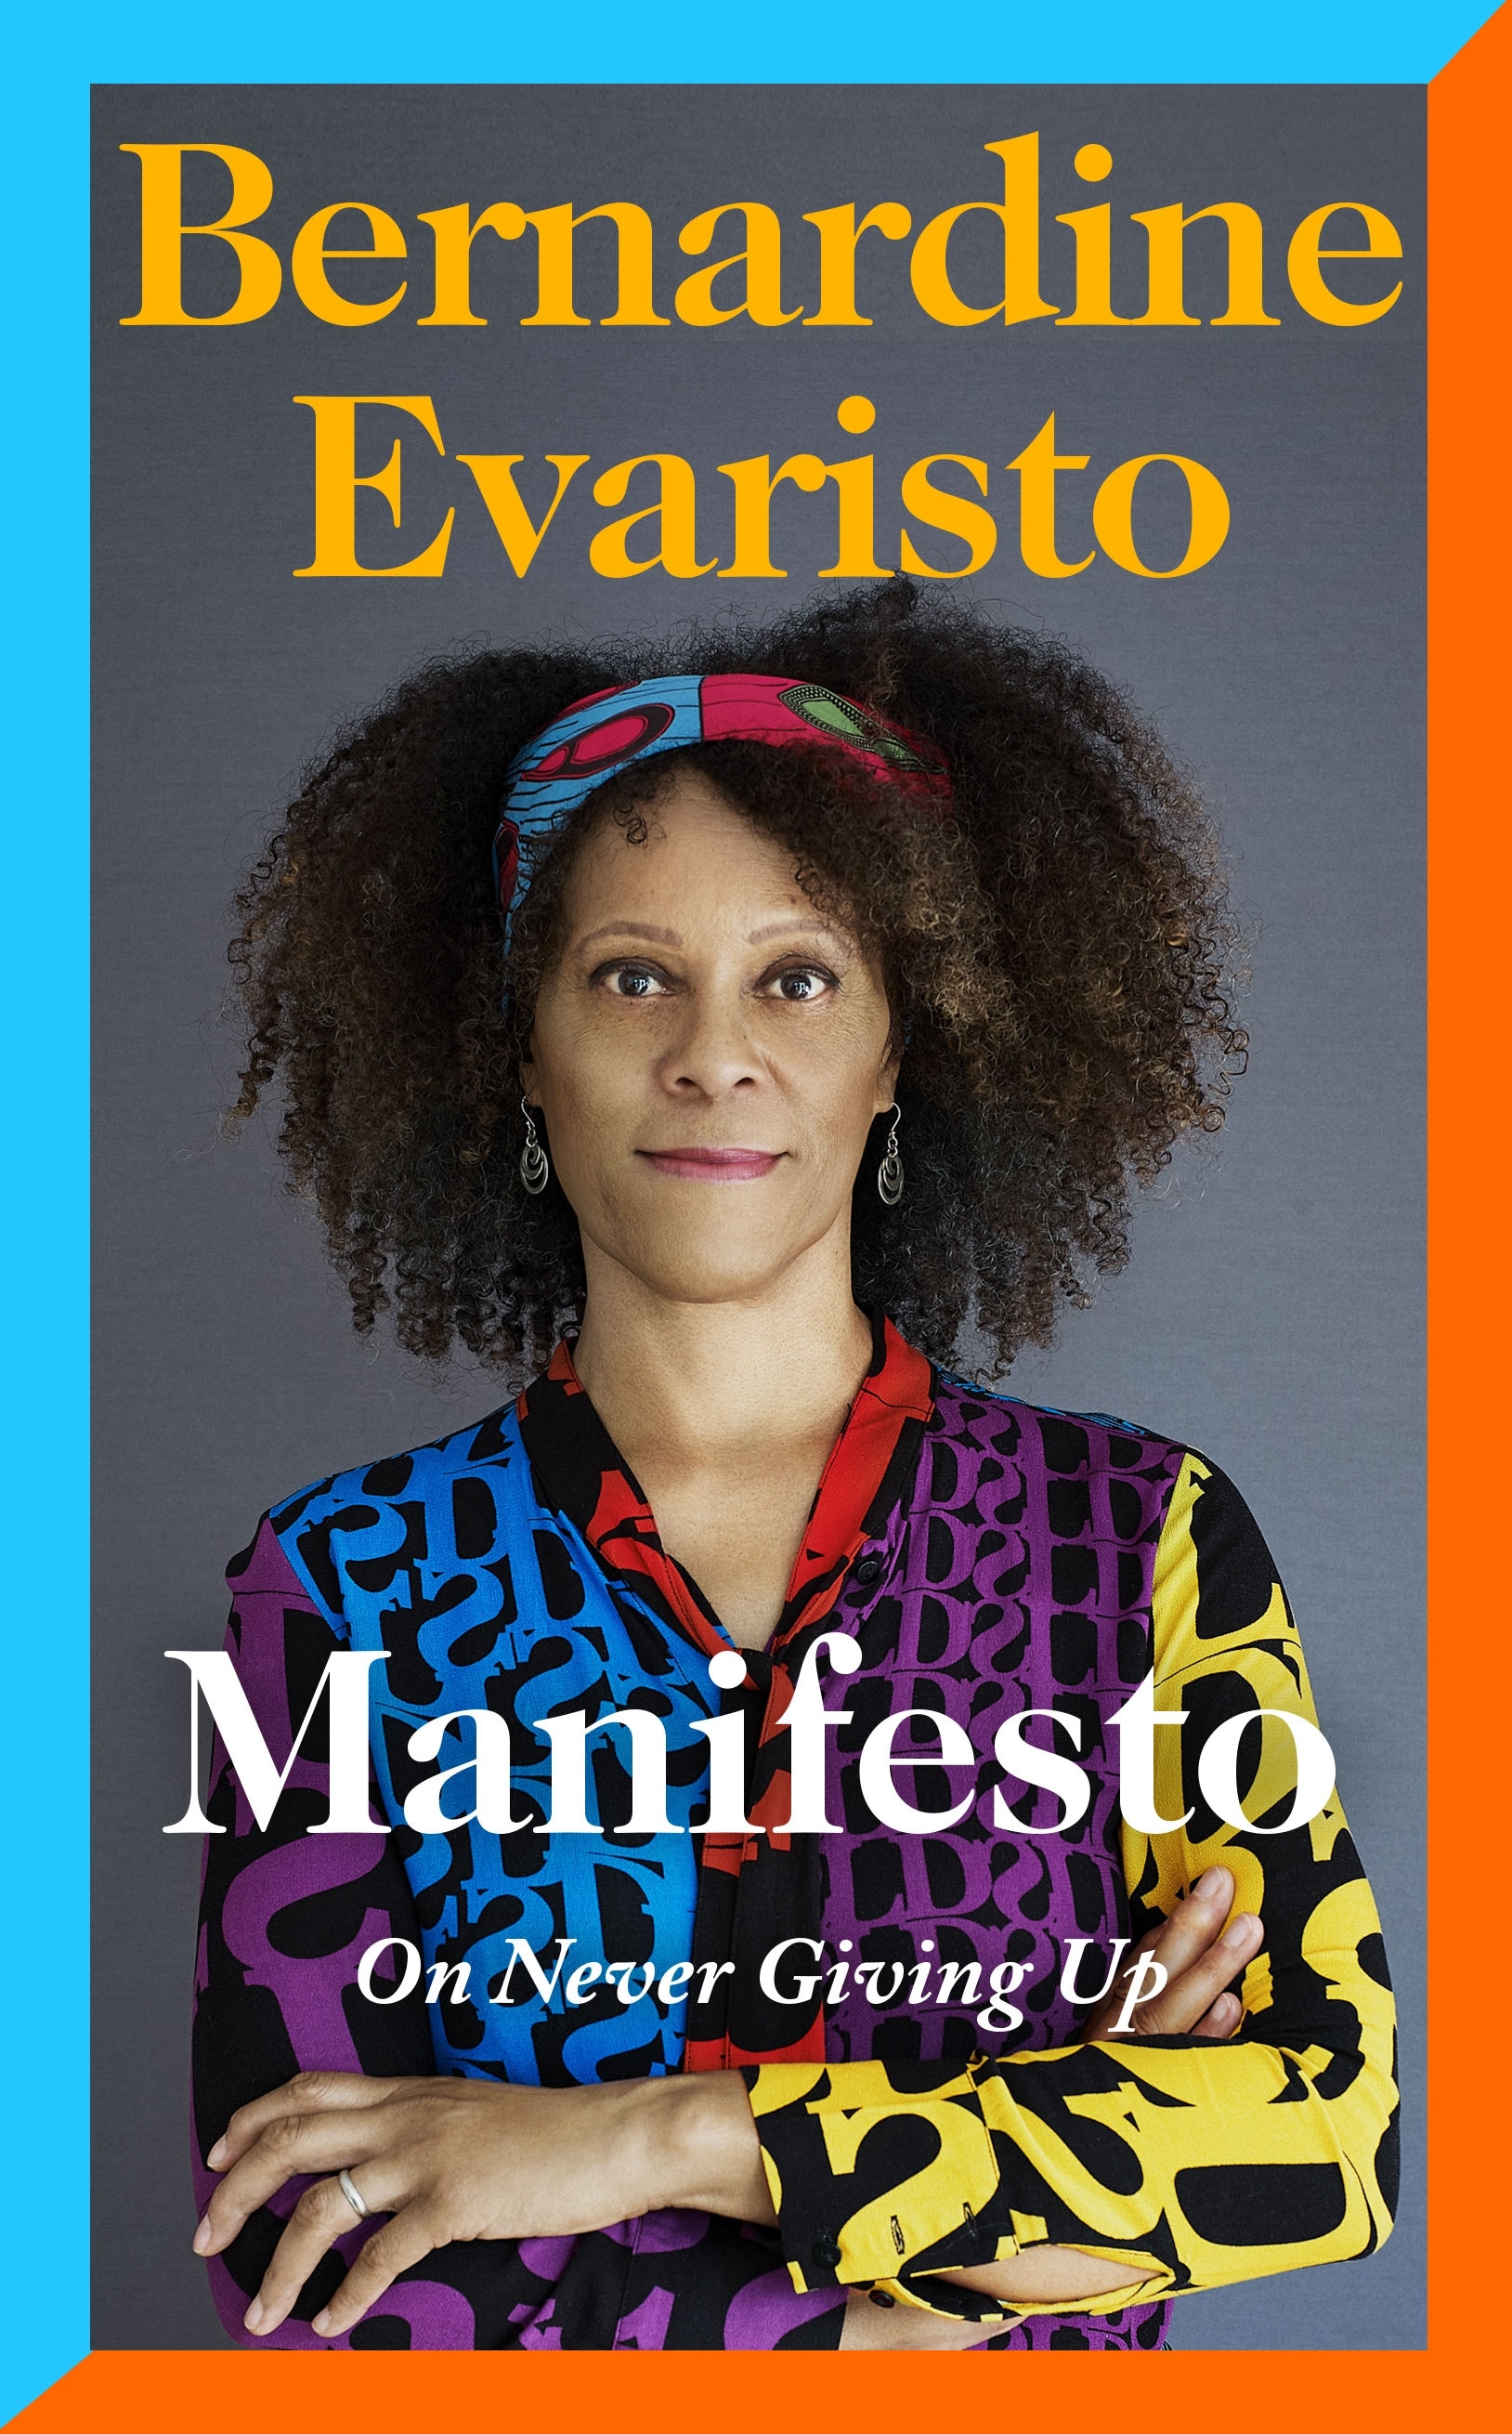 Book “Manifesto” by Bernardine Evaristo — October 7, 2021